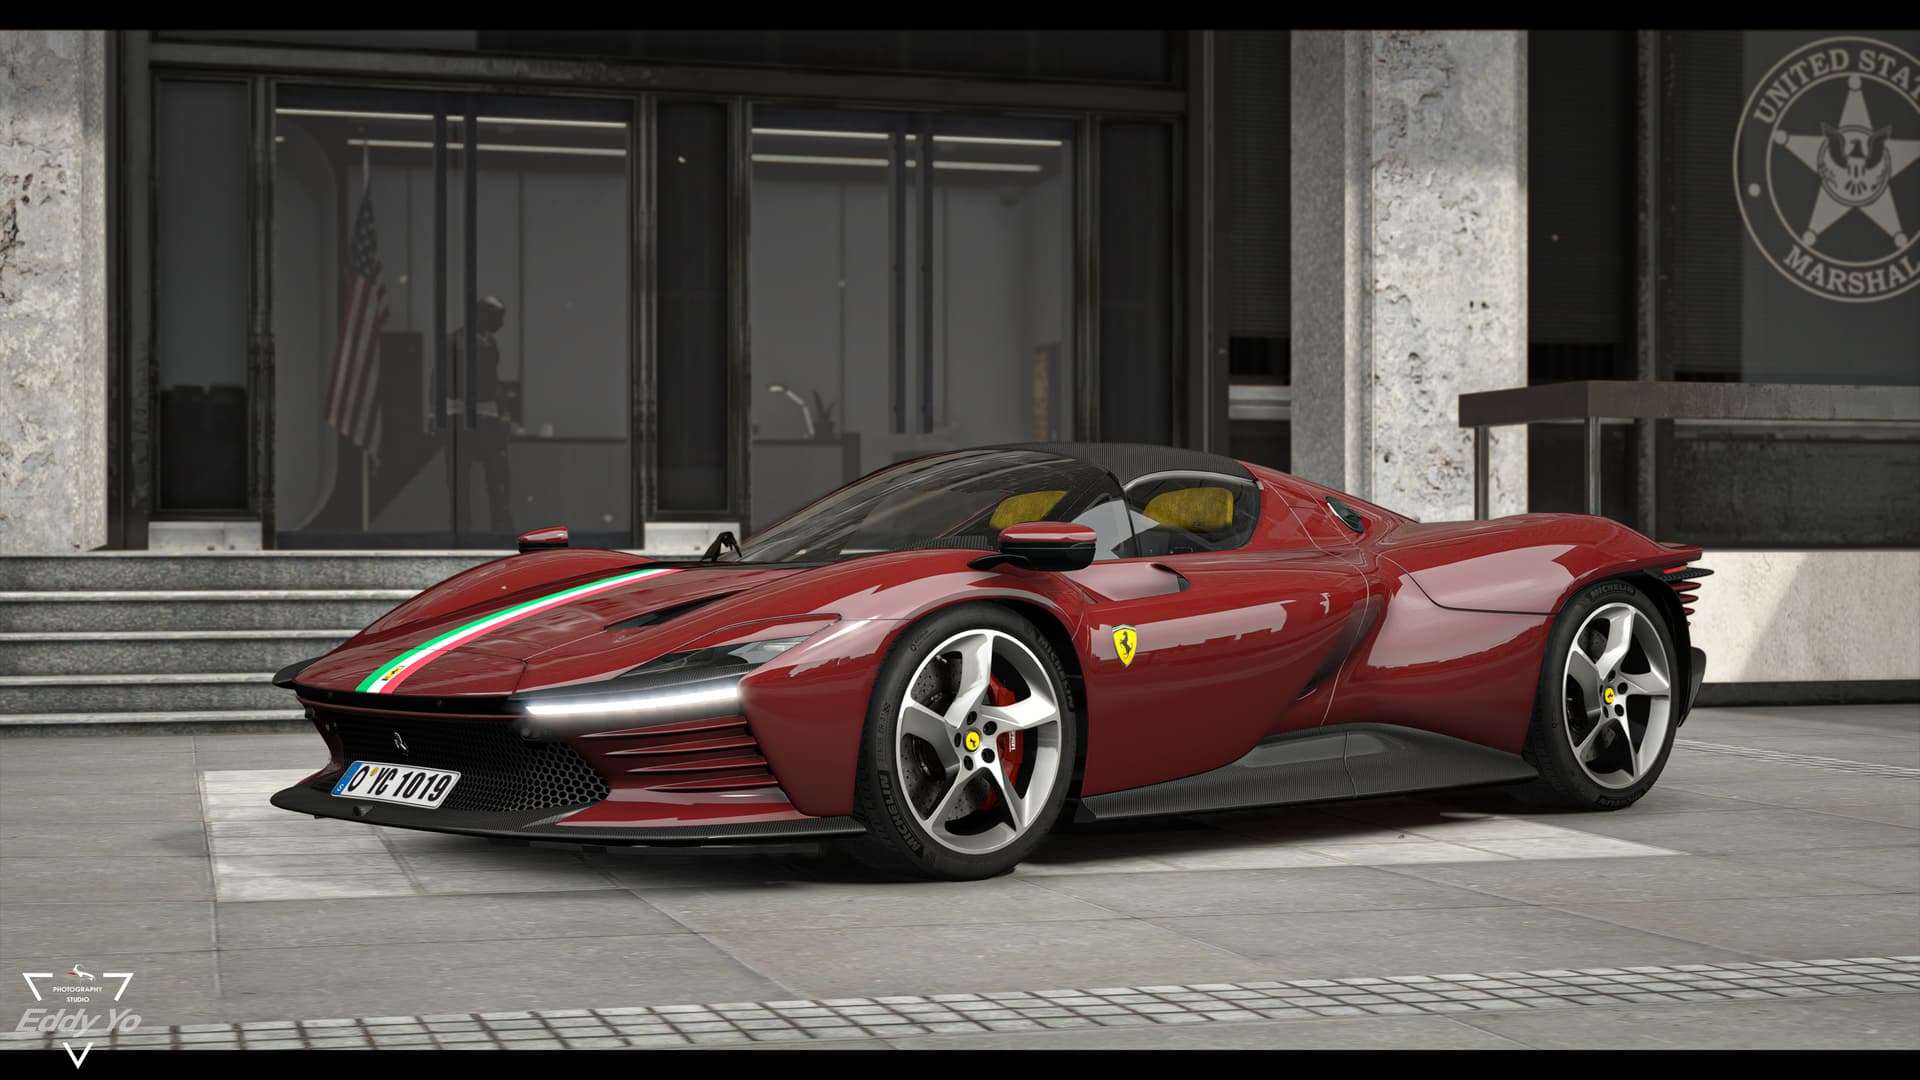 [PAID] Ferrari Daytona SP3 - Releases - Cfx.re Community